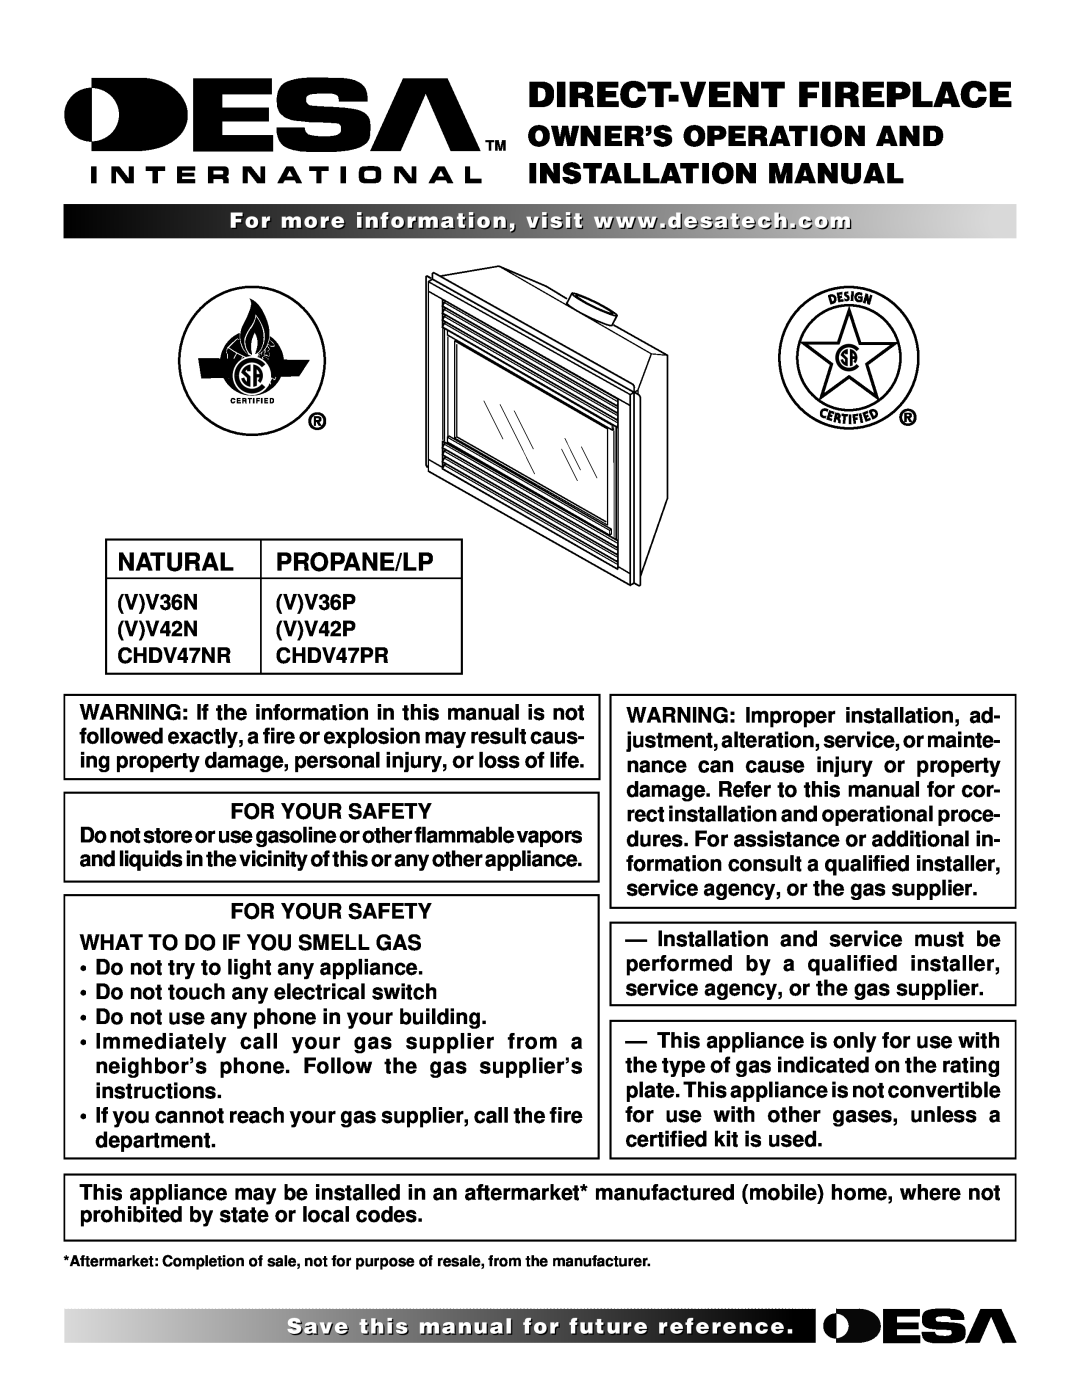 Desa CHDV47NR installation manual Tm Owner’S Operation And Installation Manual, Natural, Propane/Lp, VV36N, VV36P, VV42N 